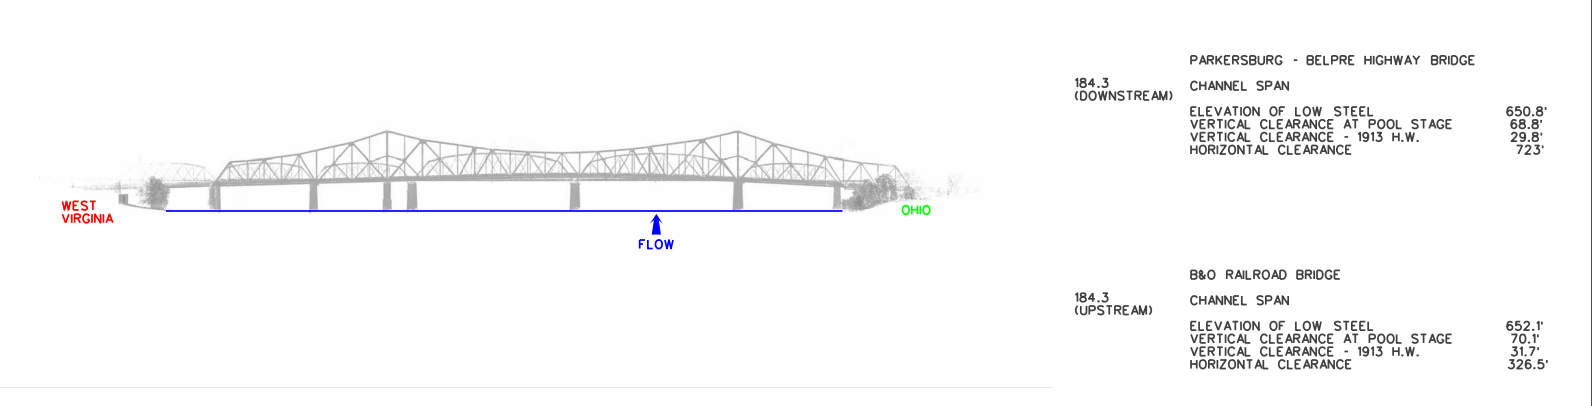 Parkersburg- Belpre Hwy Bridge Clearances | Bridge Calculator LLC